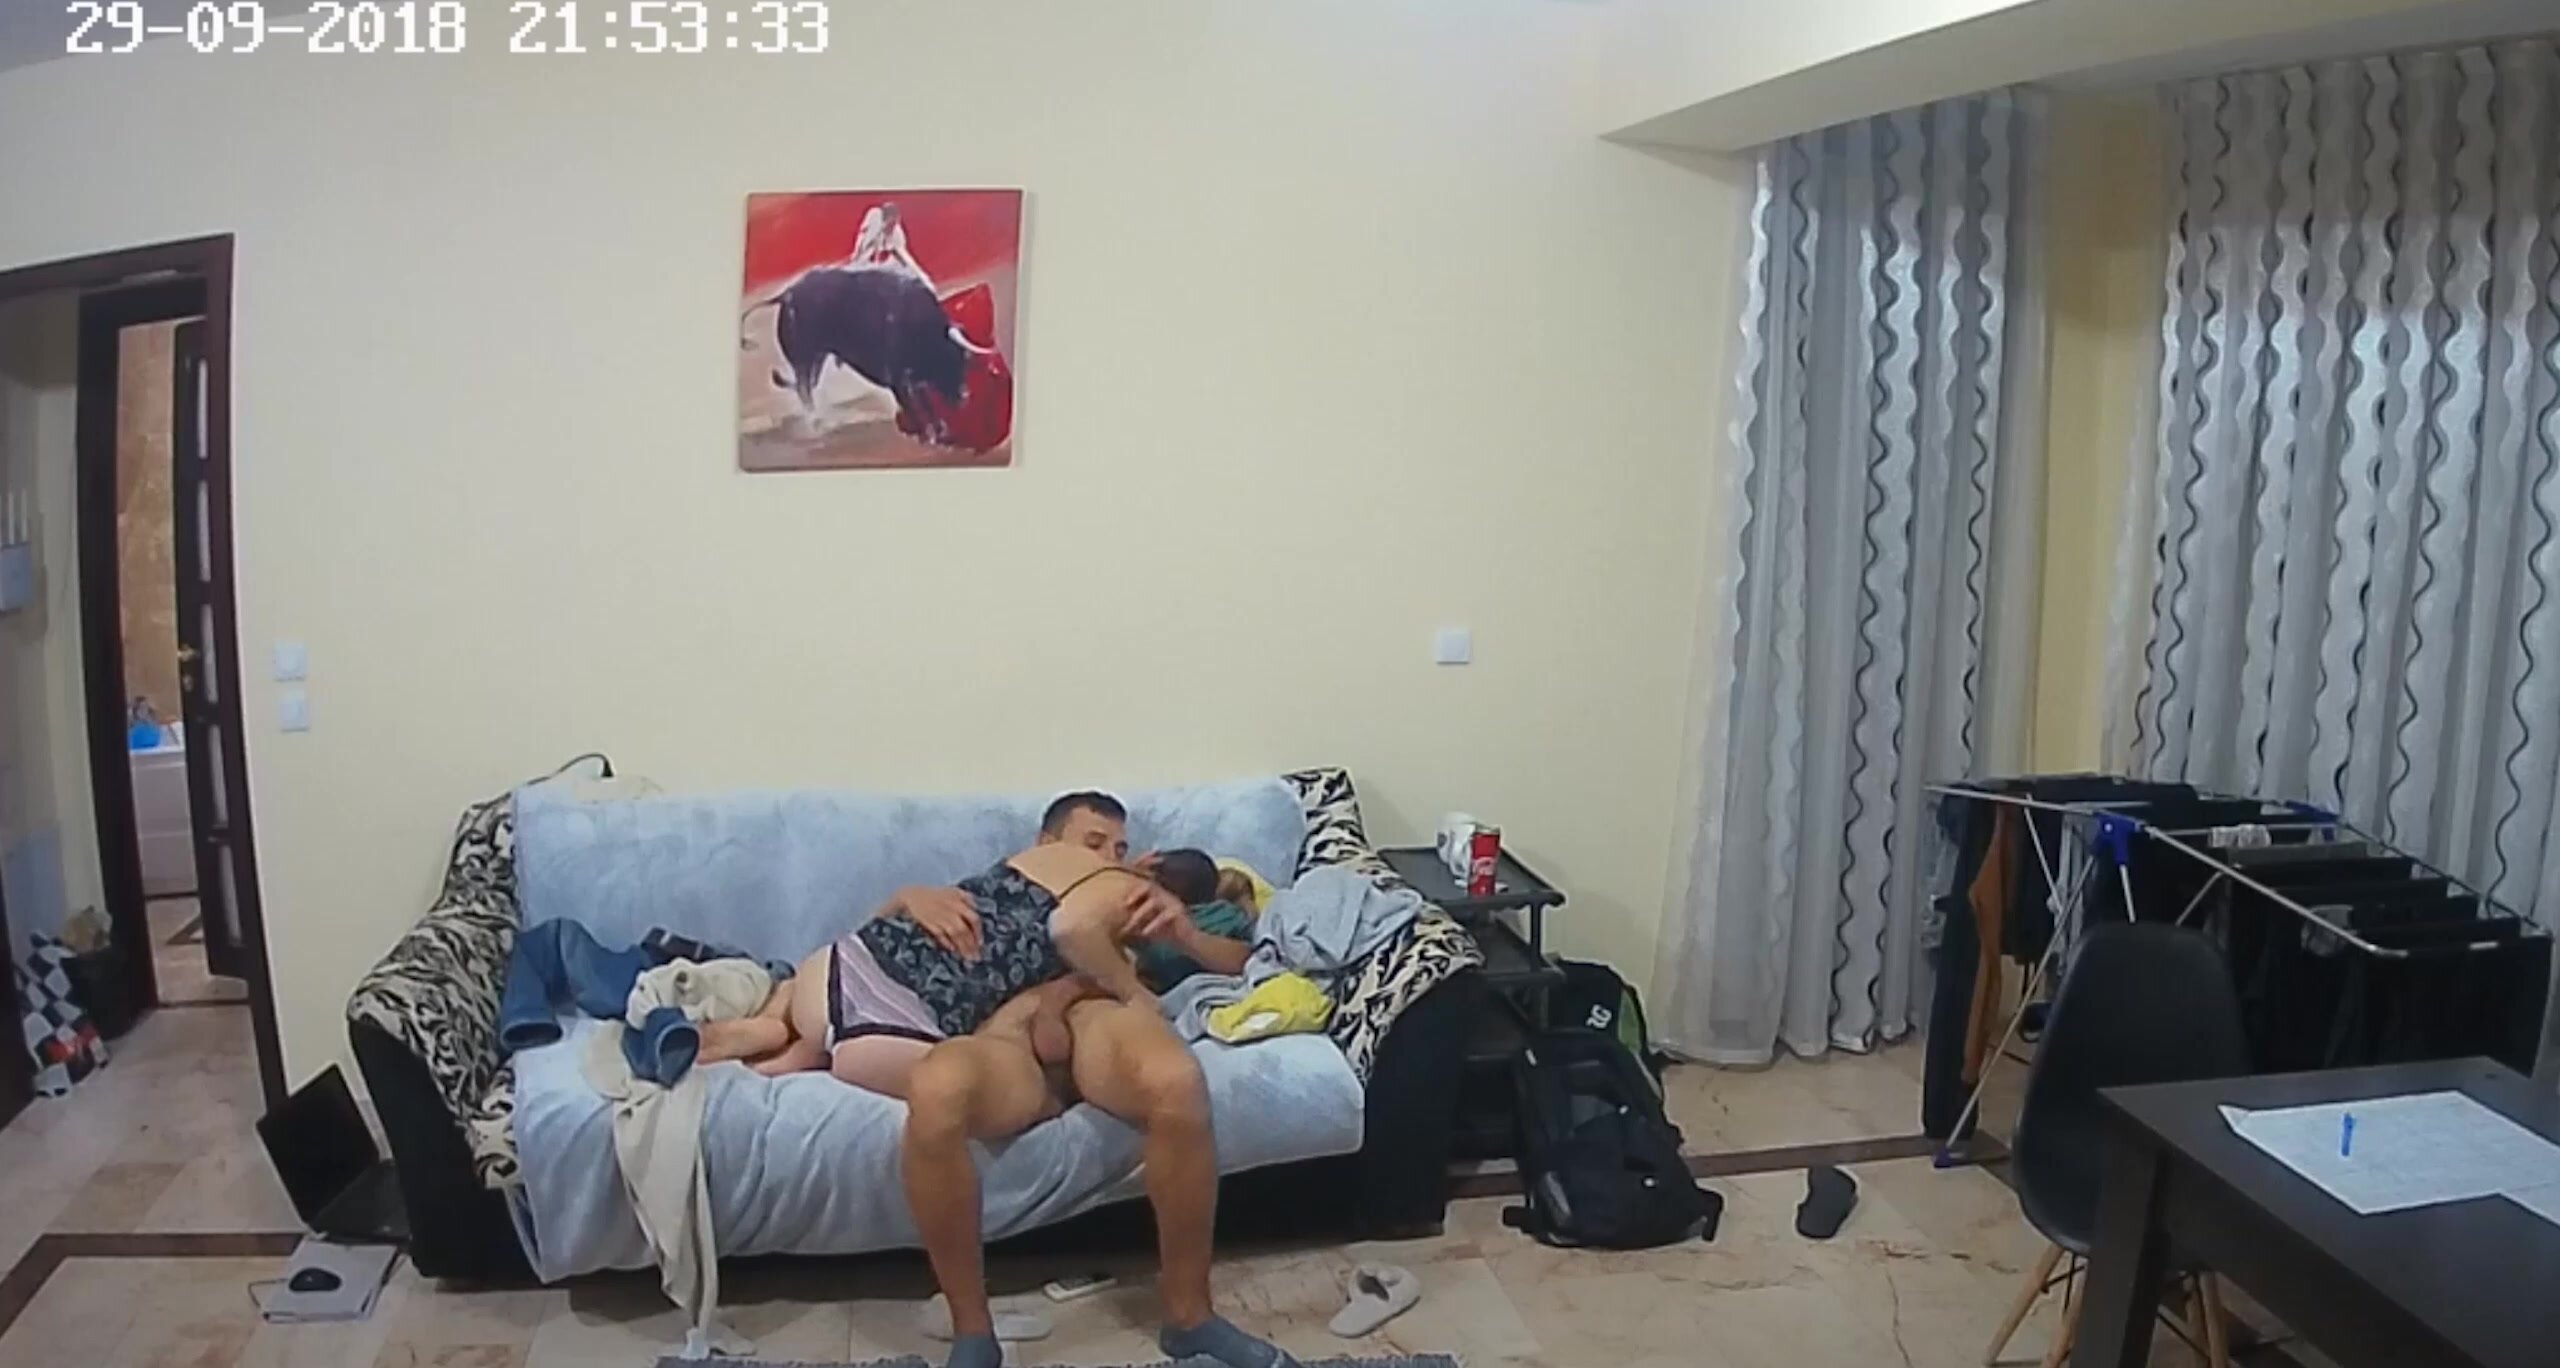 Spy - Hung Croatian Guy starting foreplay on ipcam